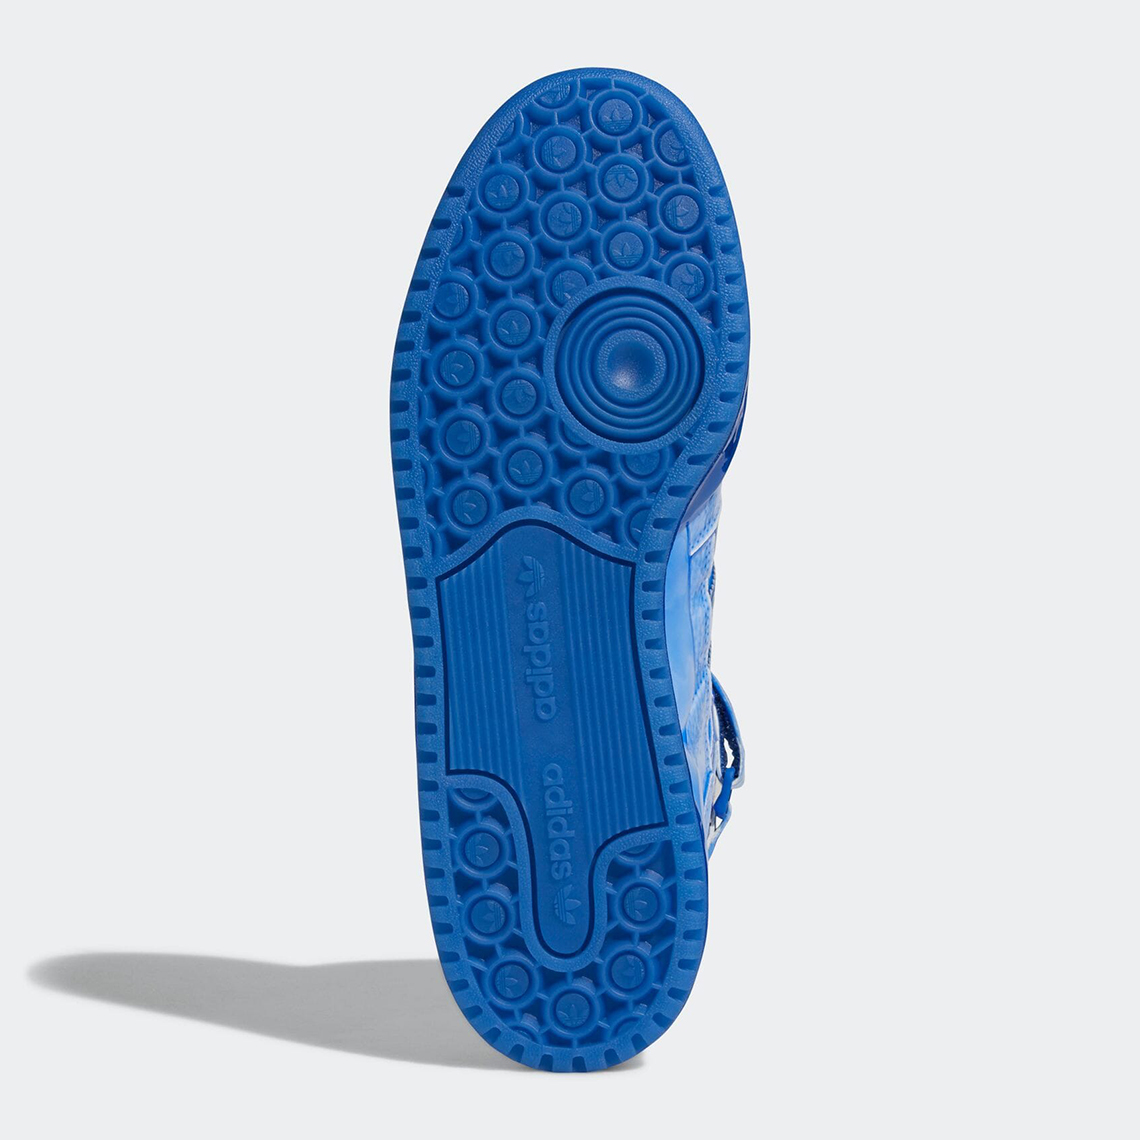 Jeremy Scott Adidas Forum Hi Dipped Blue G54995 3